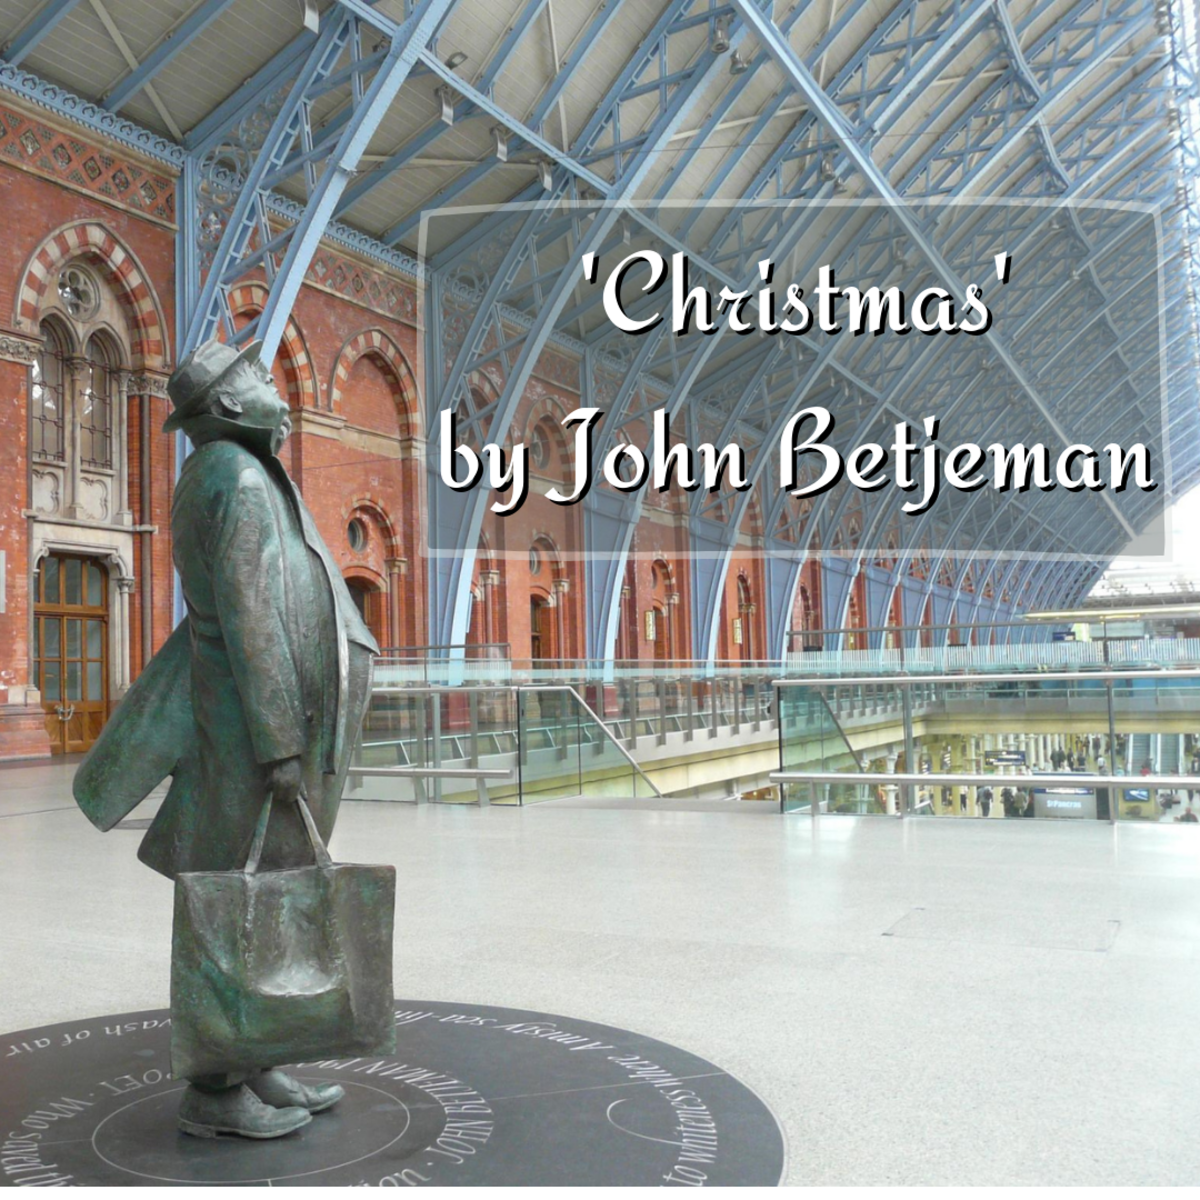 The Poem ‘Christmas' by John Betjeman: An Analysis